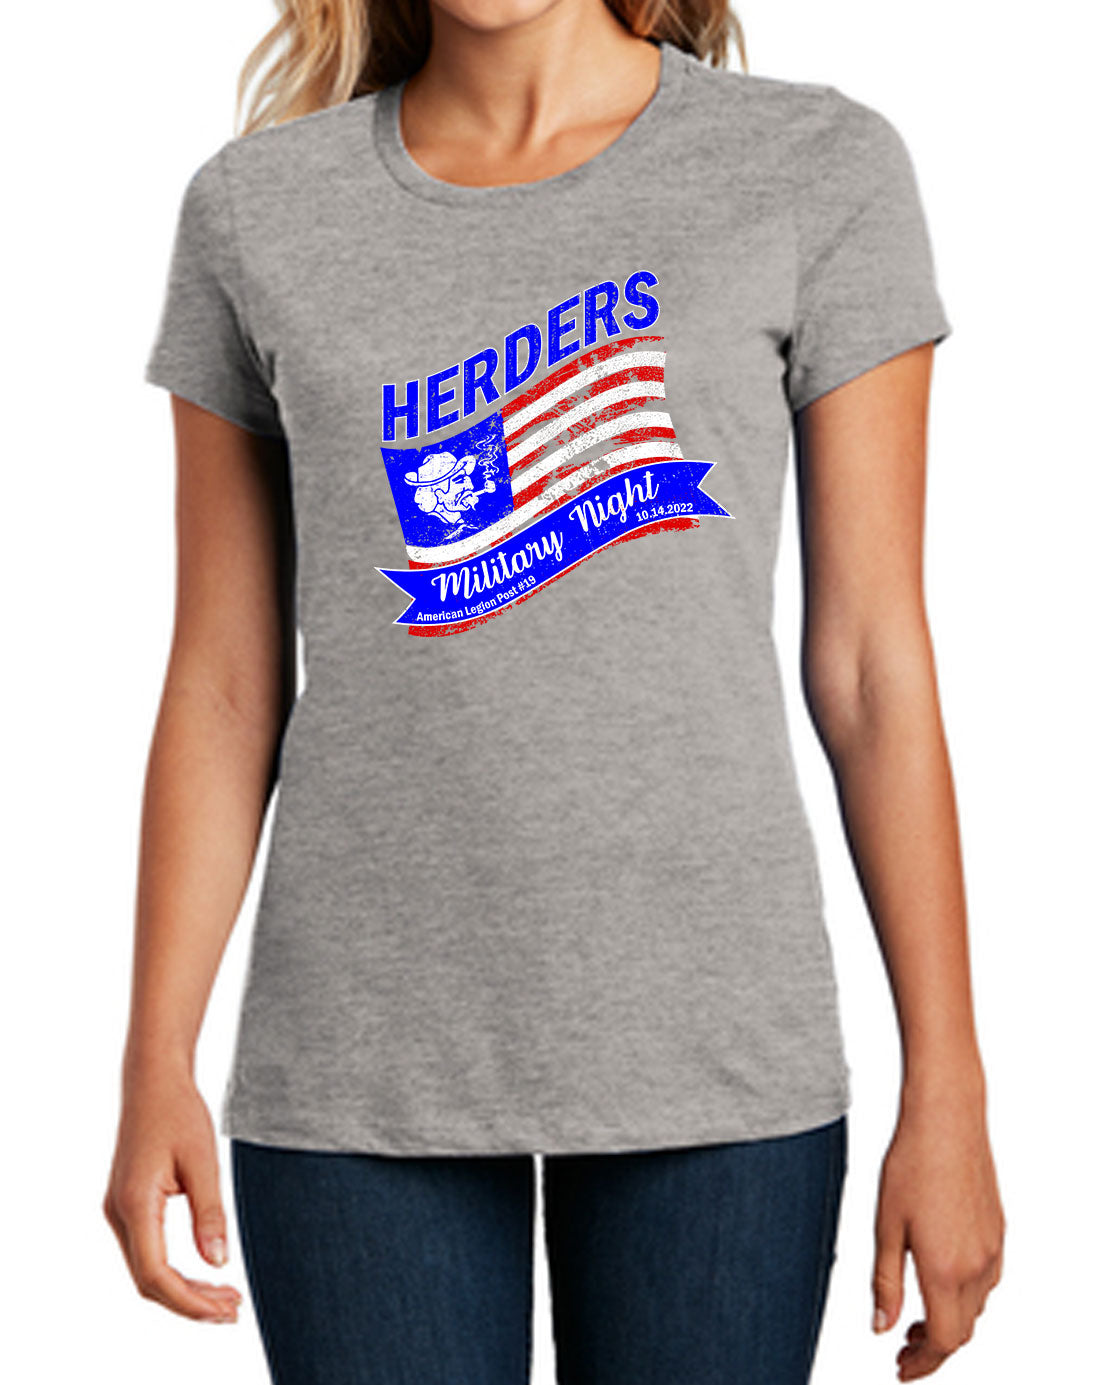 Ladies Heathered Steel Herders Legion Military Night T-Shirt